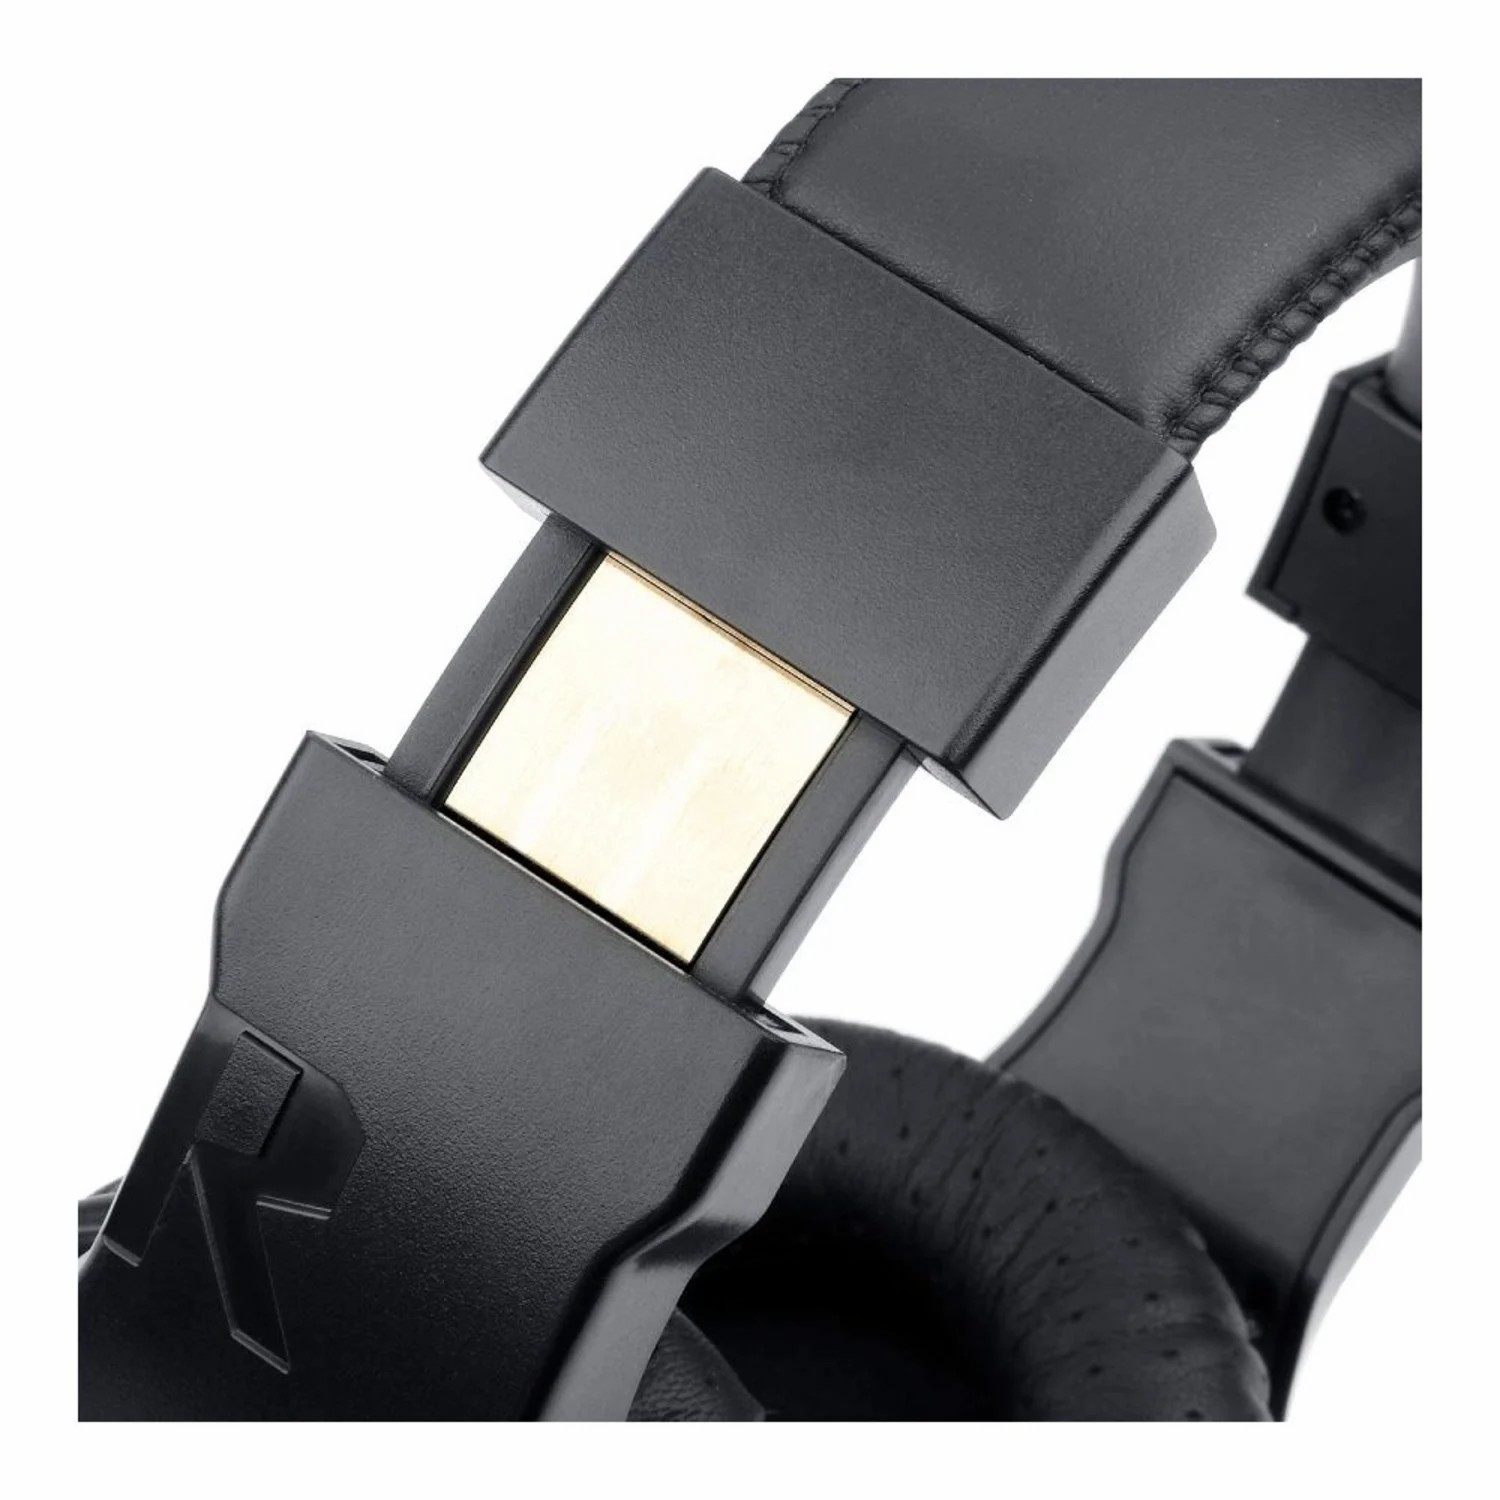 Headset Gamer Redragon Pandora 2 H350RGB-1 USB RGB - Preto (Caixa Danificada)
